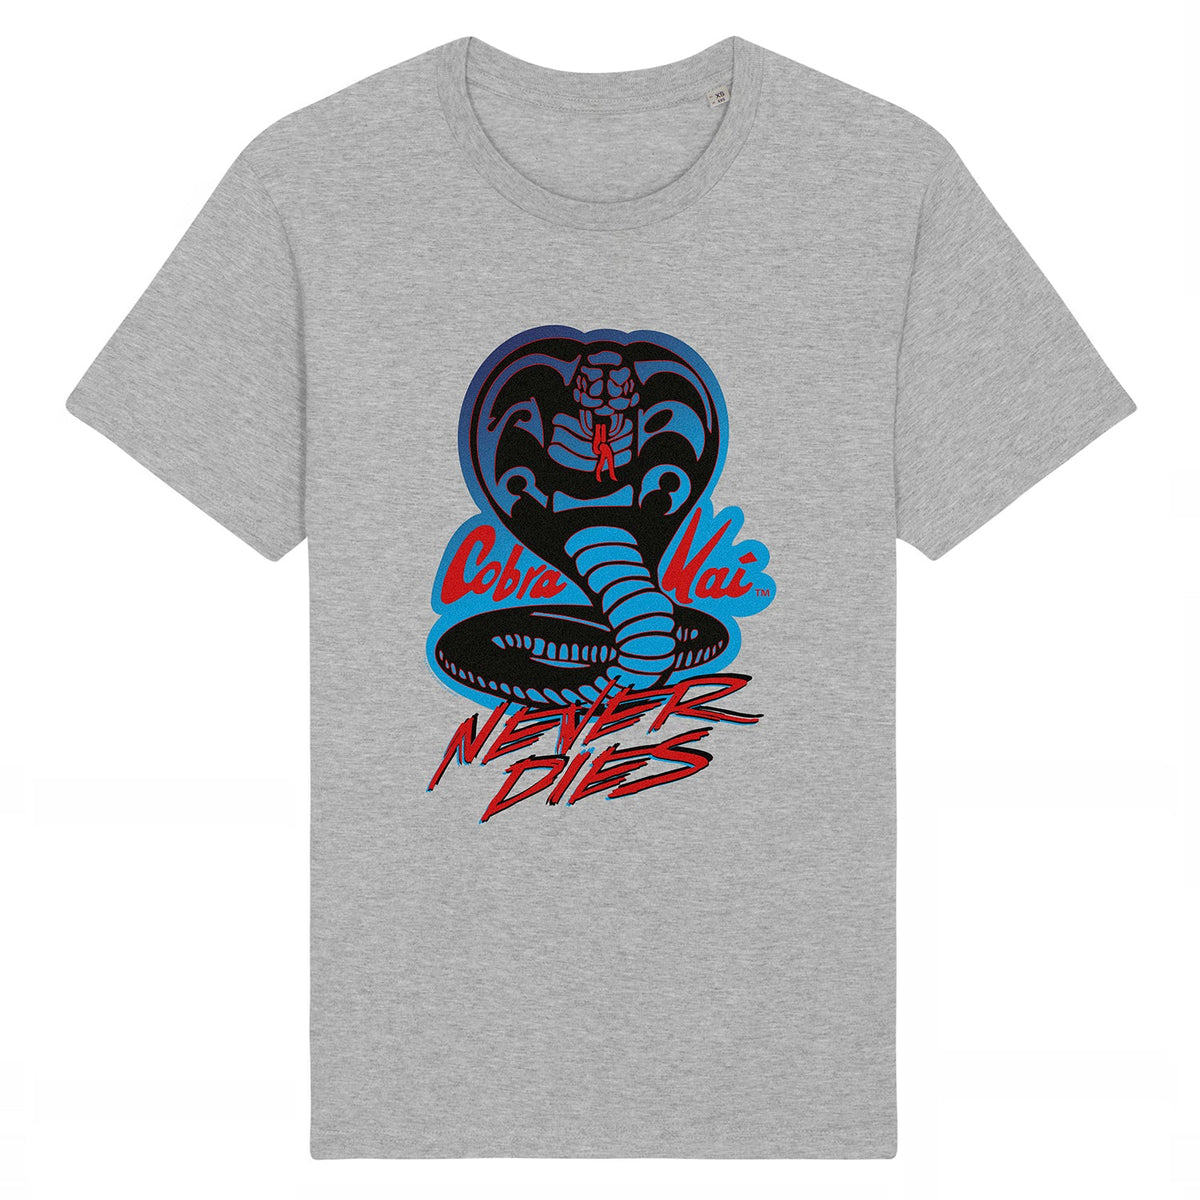 Cobra Kai Never Dies Heather Grey Kids T-Shirt